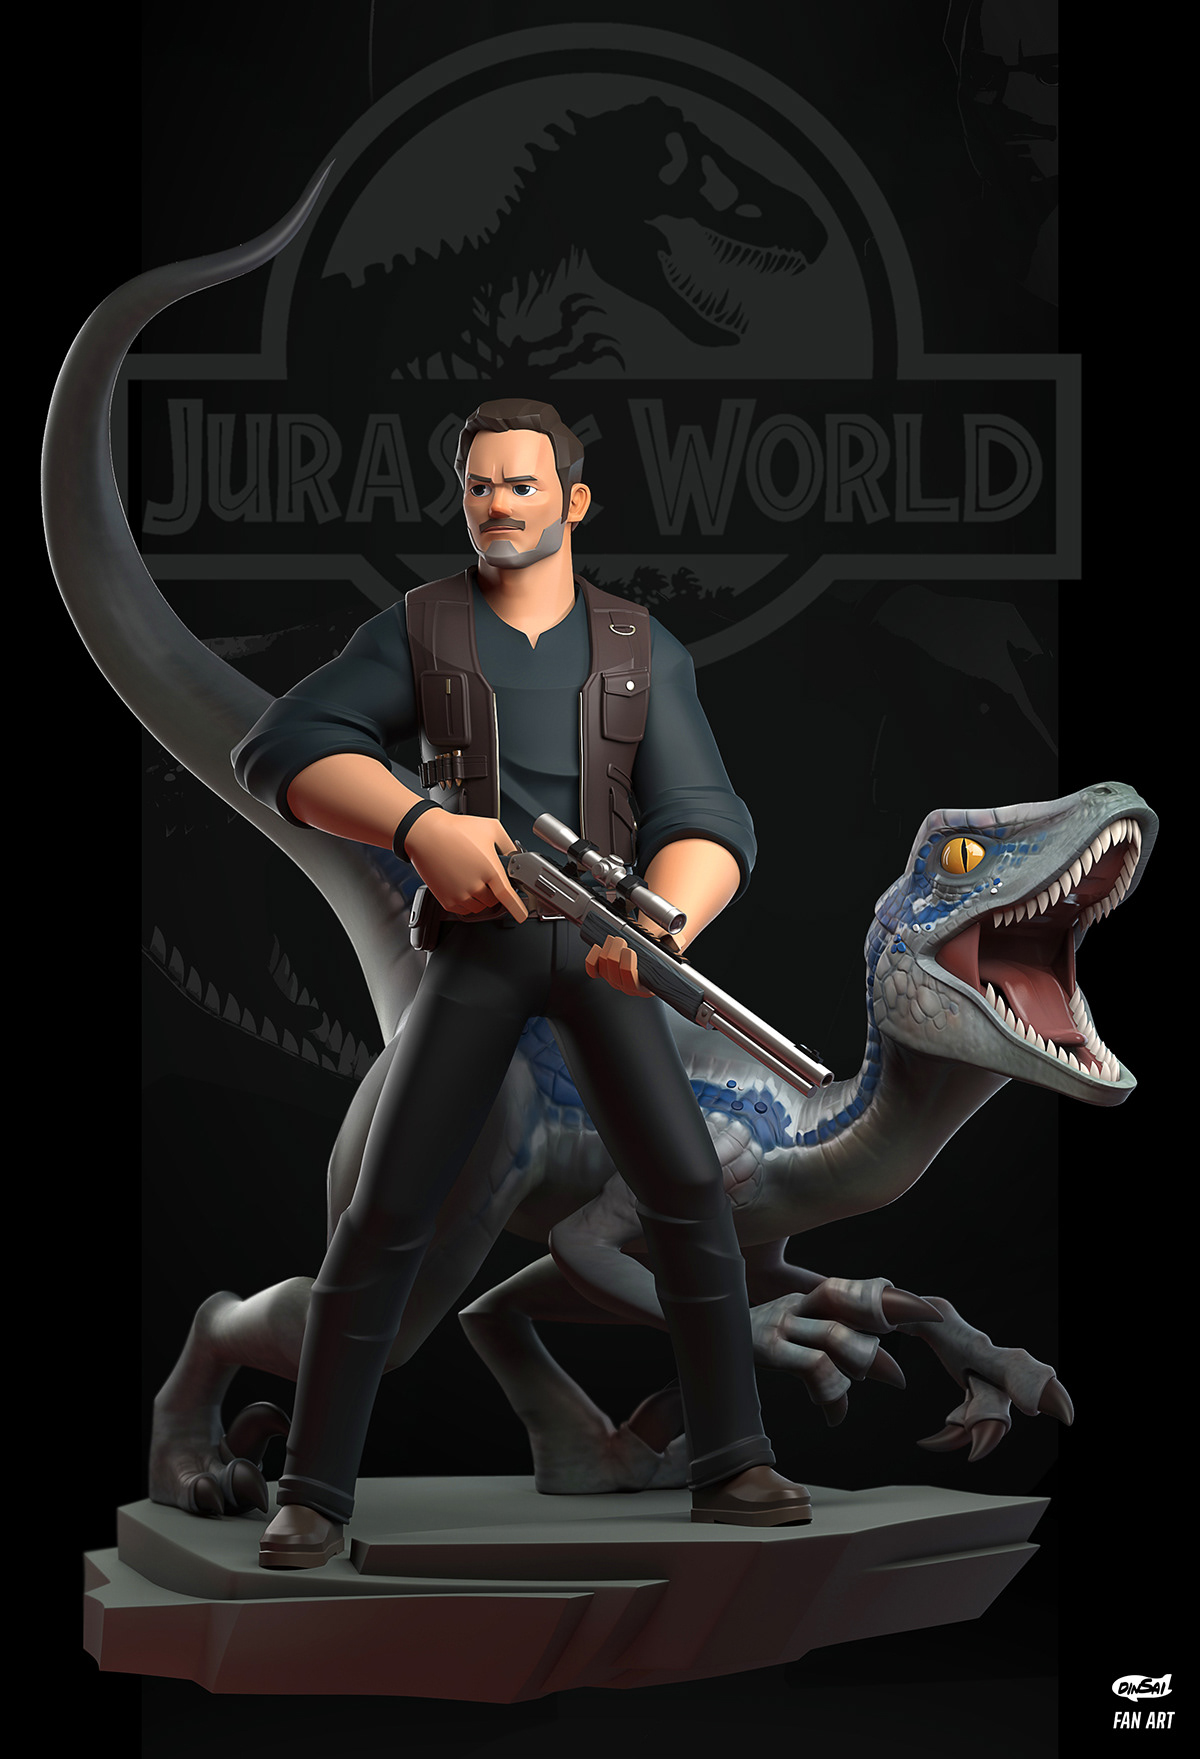 Jurassic World raptor model sculpture